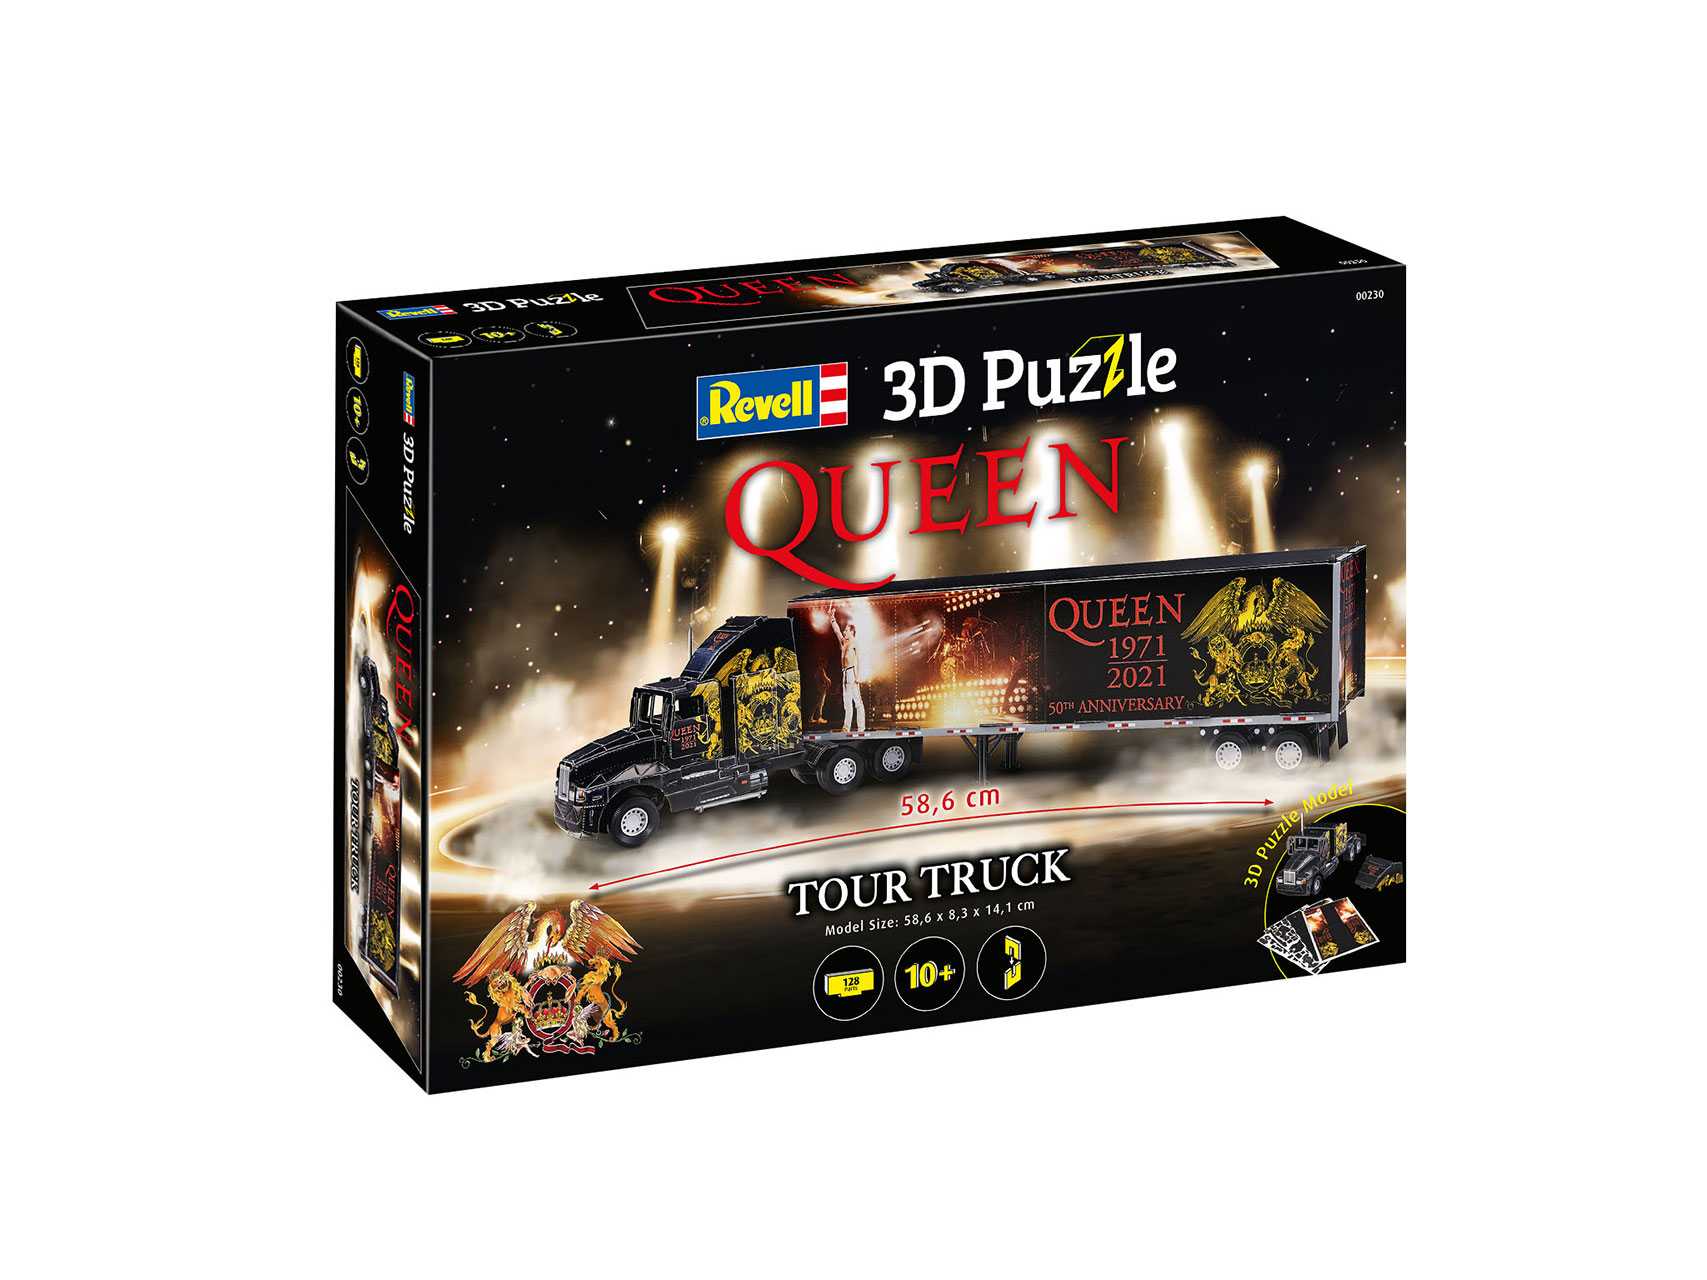 Revell 3D Puzzle Tour Eiffel Tower LED Edition 00150